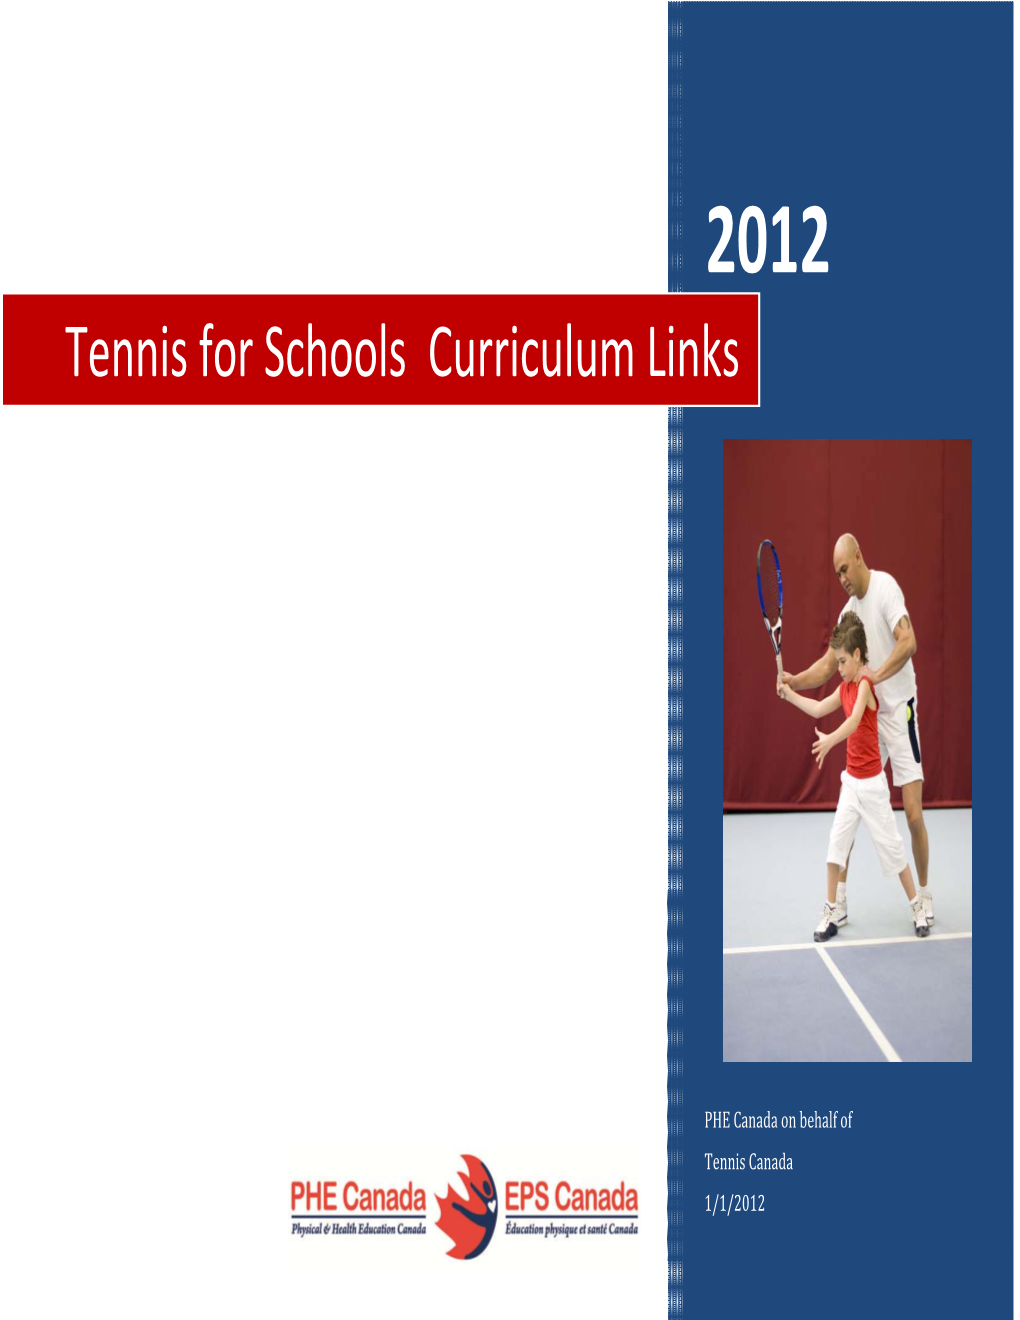 Tennis for Schools Curriculum Links